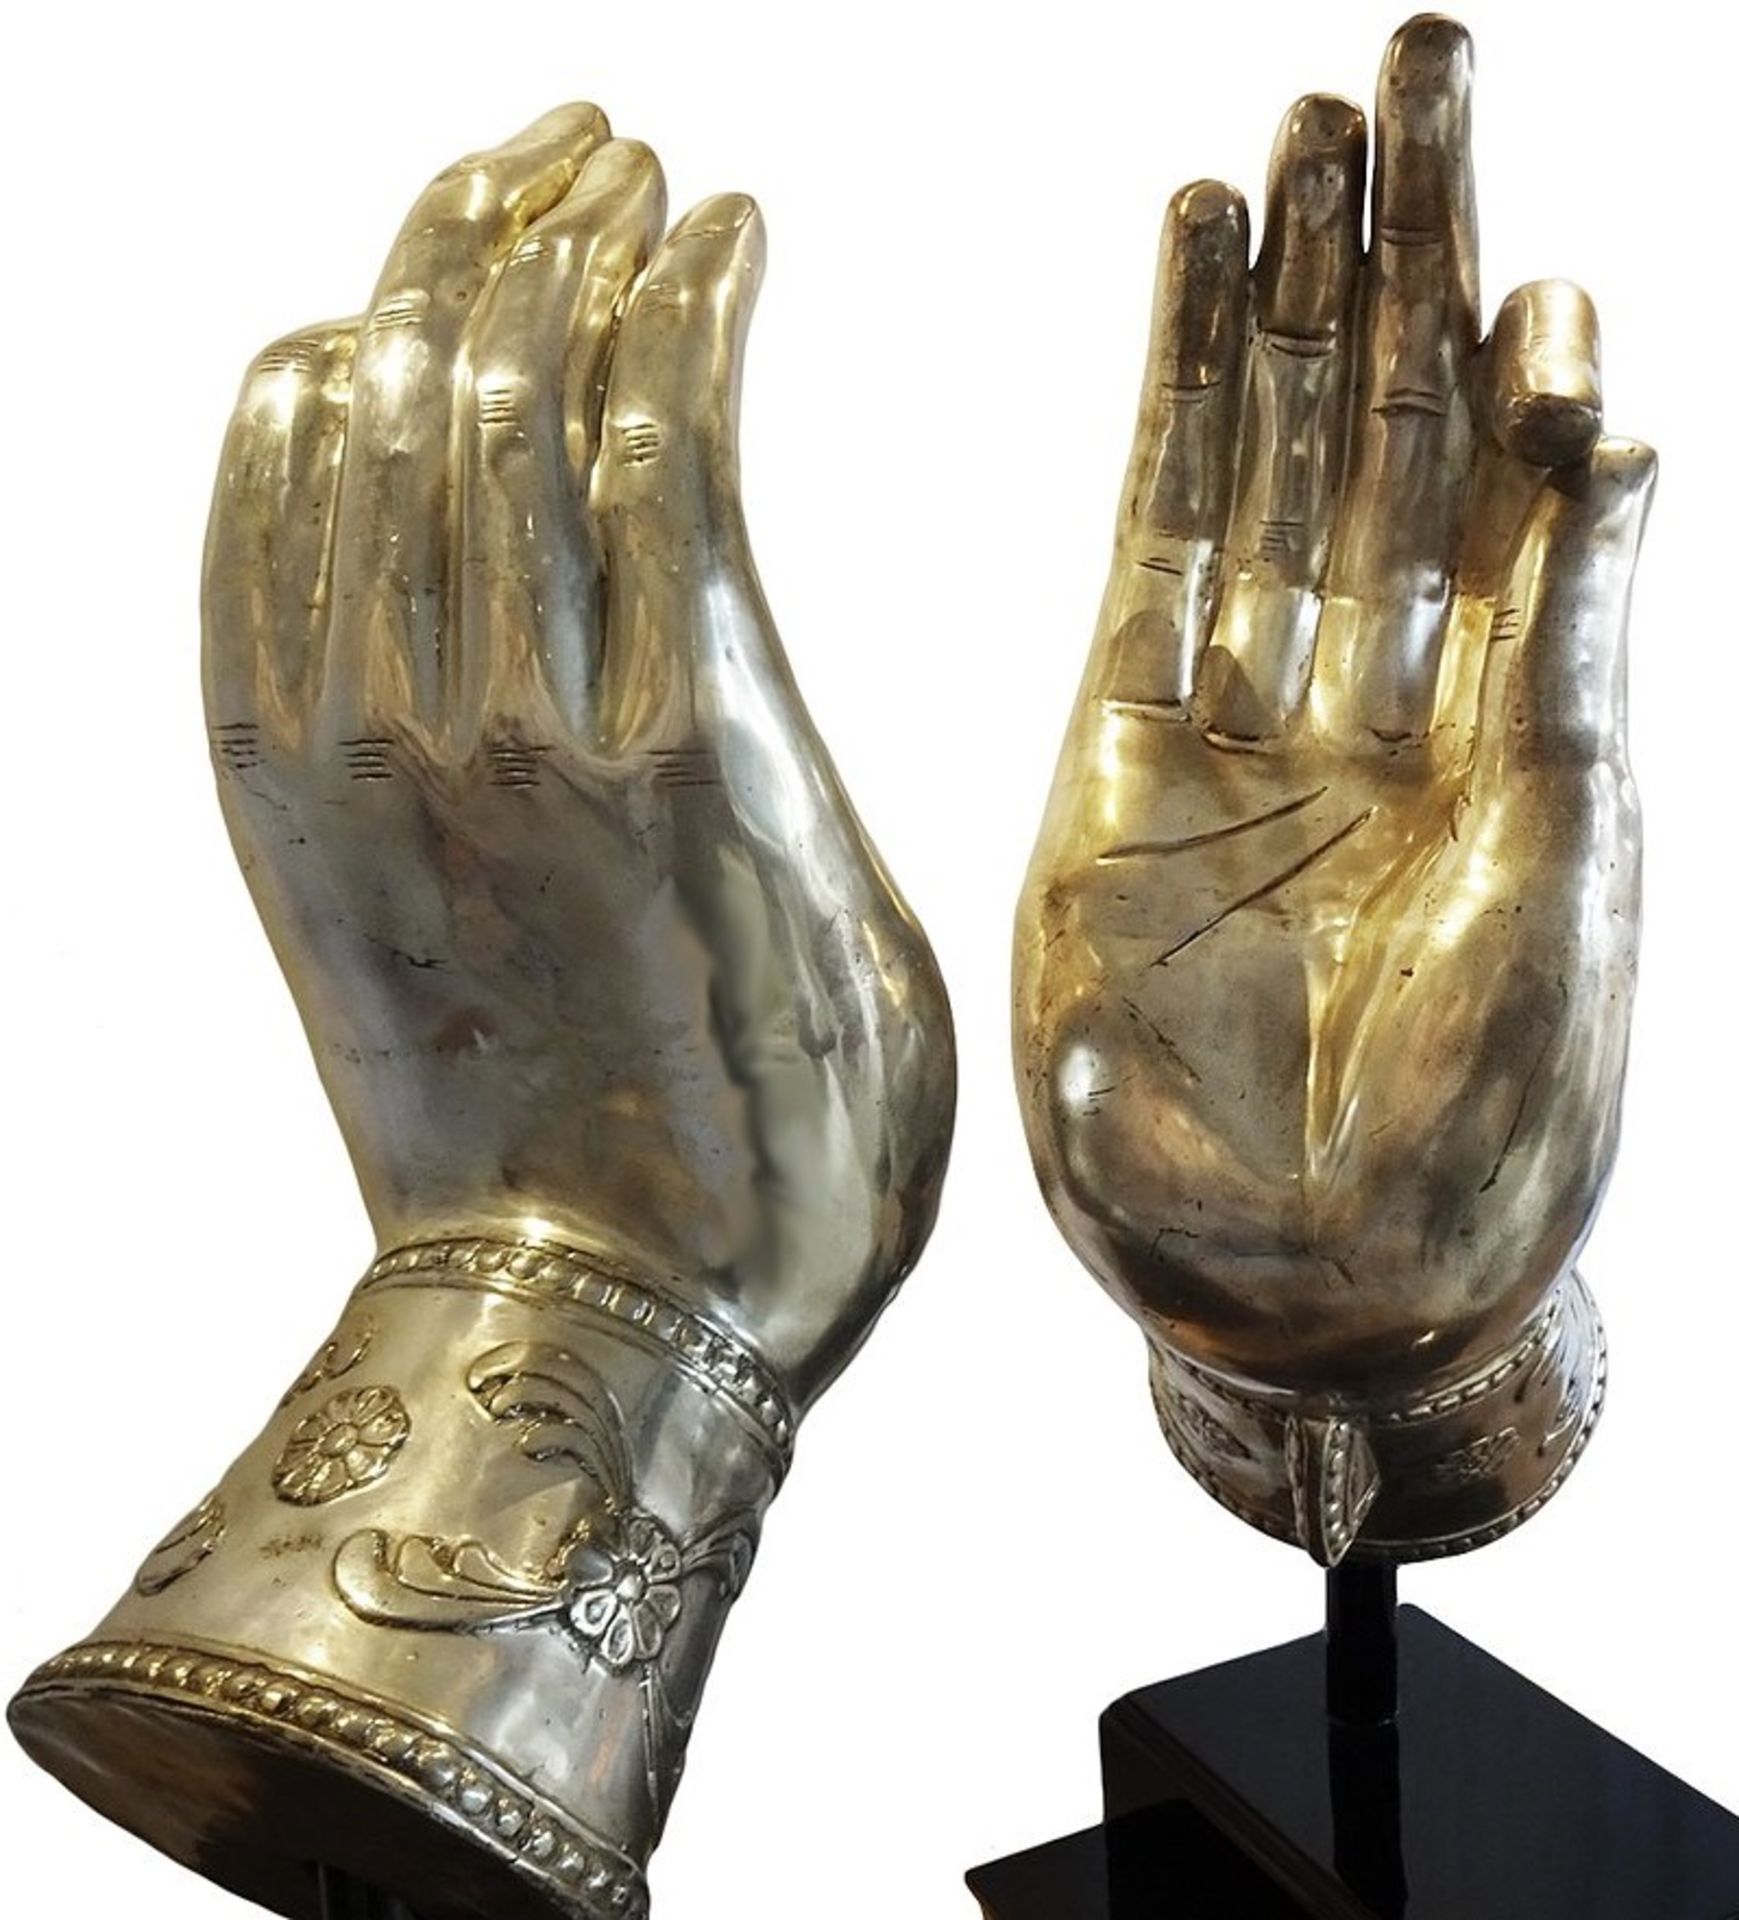 1 x Large Decorative Polished Metal Vitarka Mudra Buddha Hand - Beautifully Hand Crafted and - Image 10 of 12